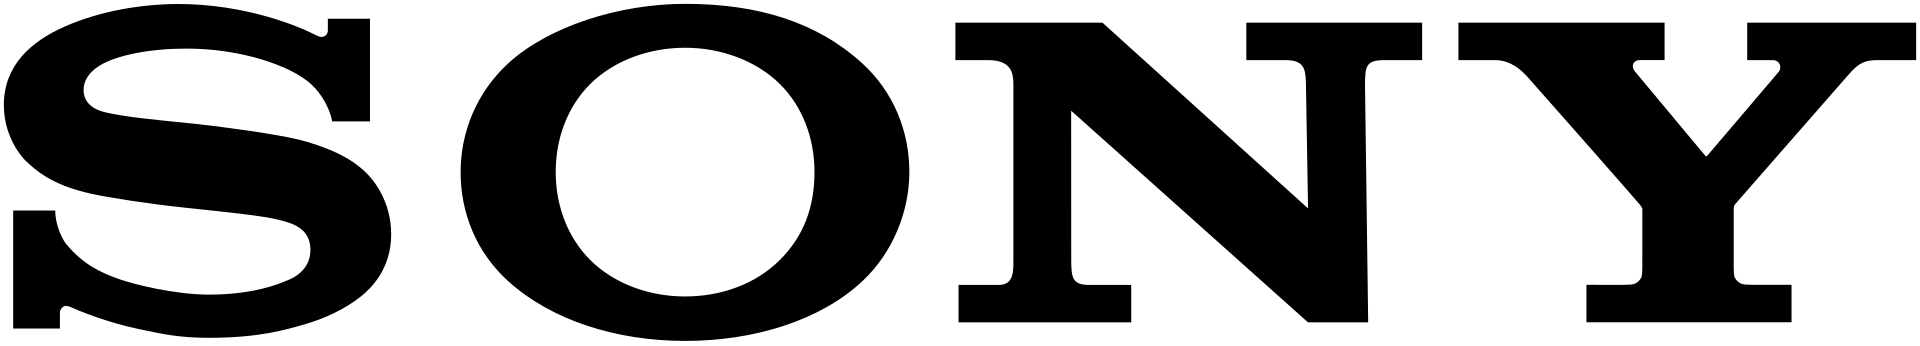 1920px-Sony_logo.svg.png